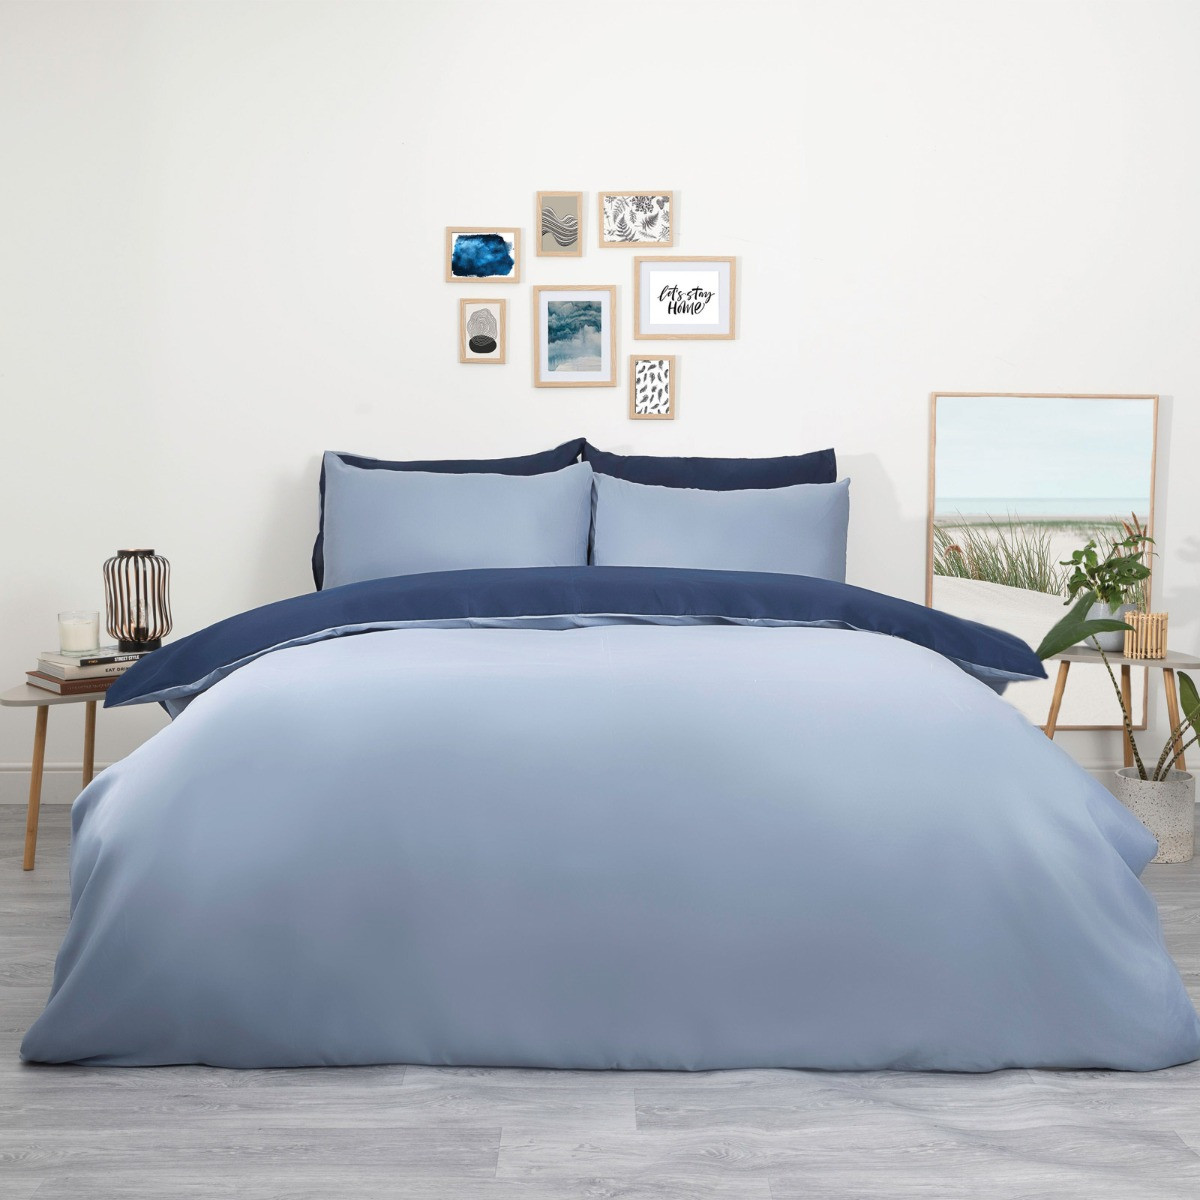 Brentfords Plain Dyed Duvet Cover Quilt Bedding Set With Pillowcase Navy Blue King>